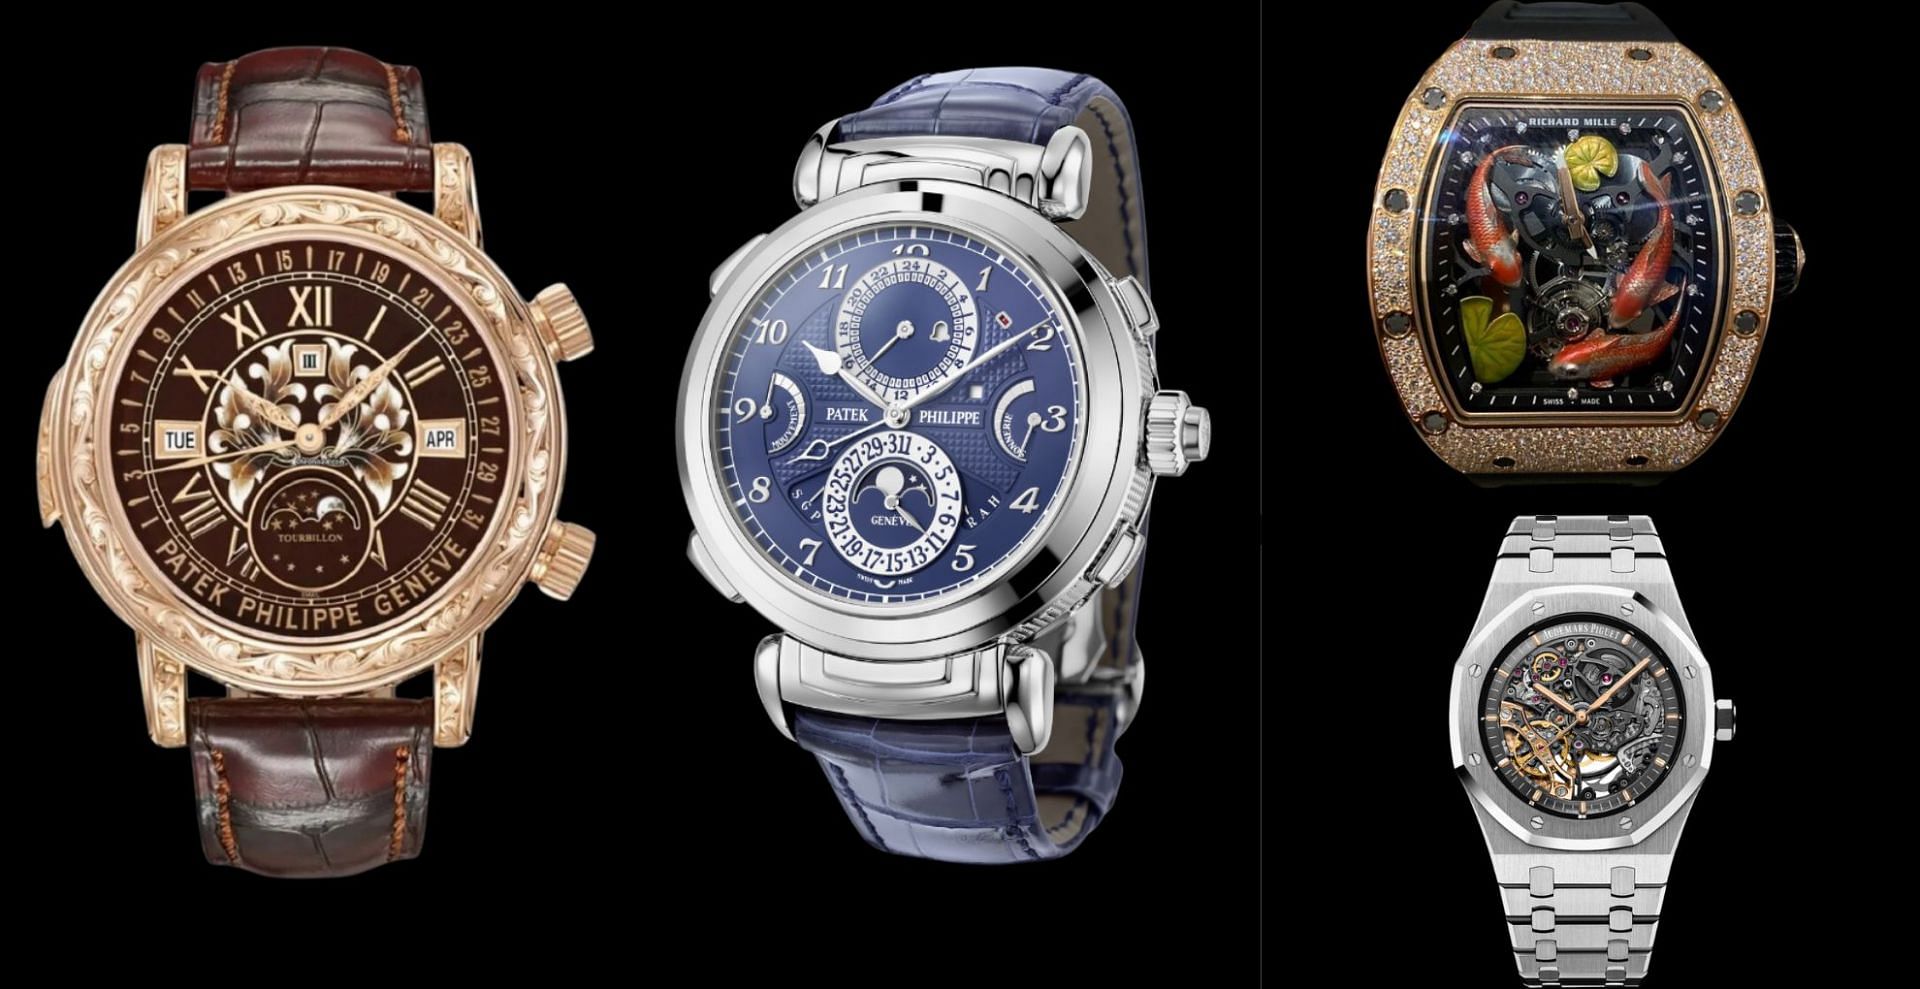 Anant Ambani&rsquo;s extravagant watch collection